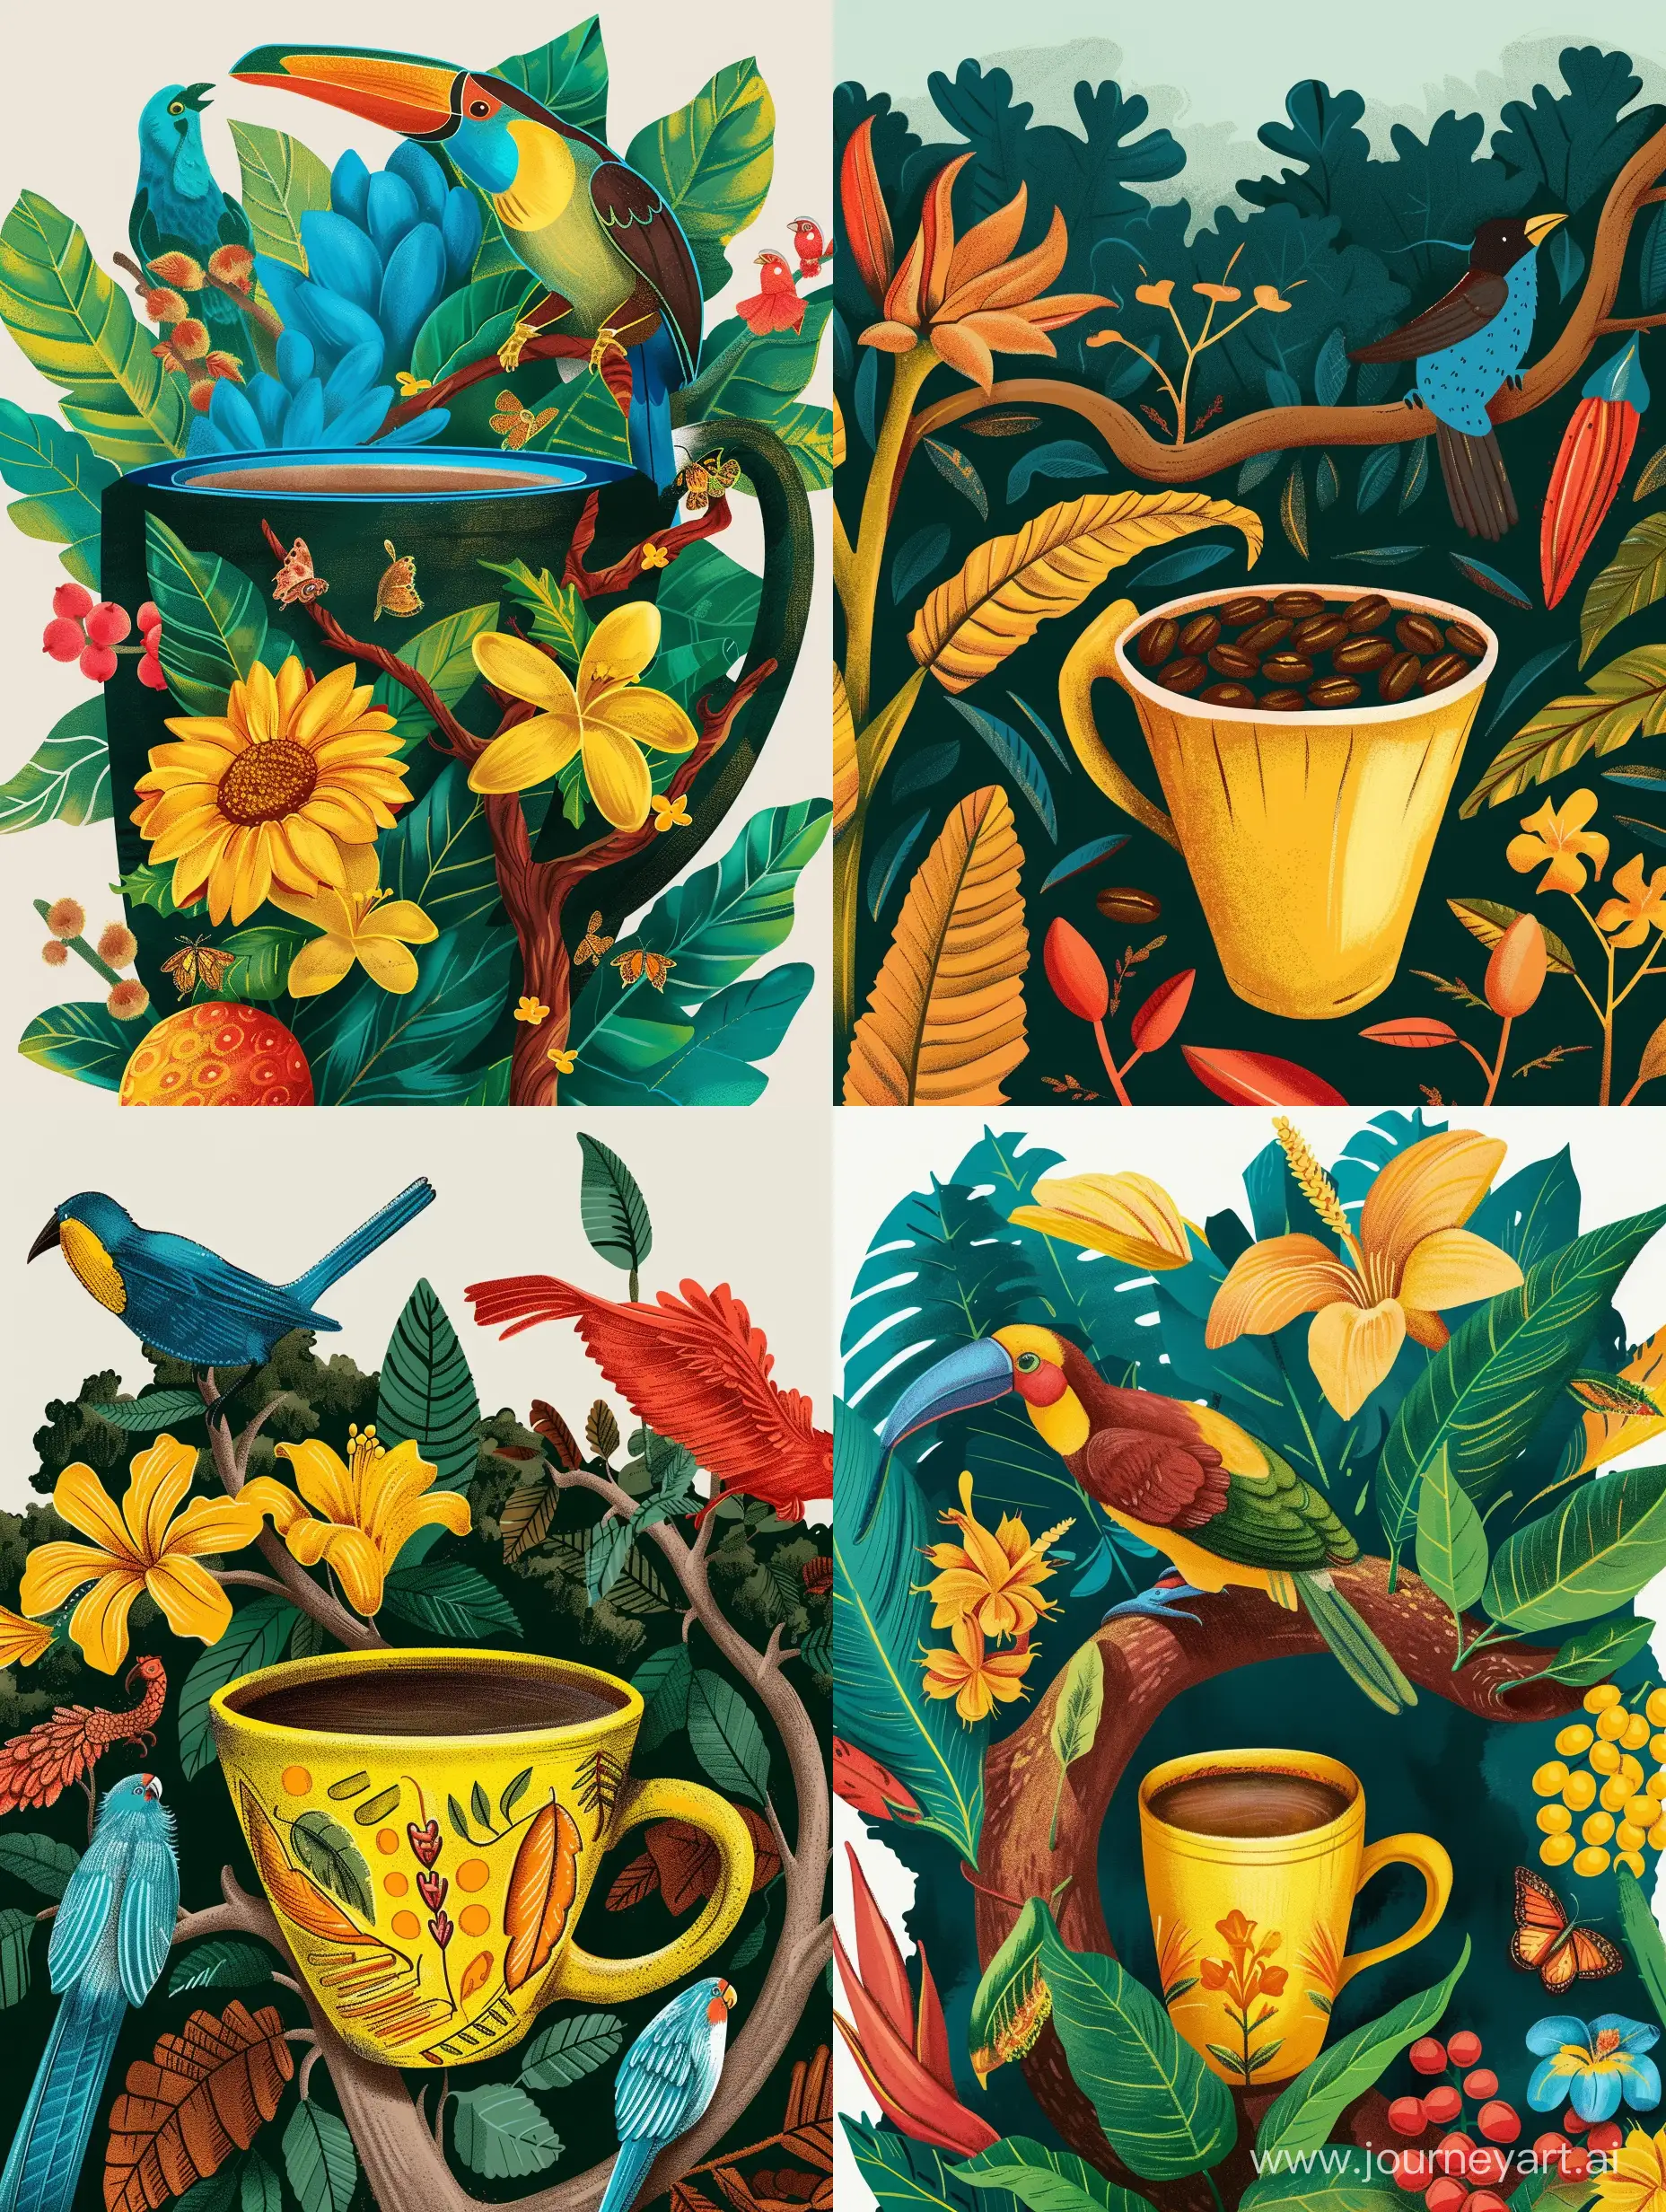 Иллюстрация чашка кофе на фоне природы Бразилии, животных, птиц и растений Бразилии - serf https://i.pinimg.com/564x/79/bb/dd/79bbdd58e879d9243a18b7548461ad33.jpg